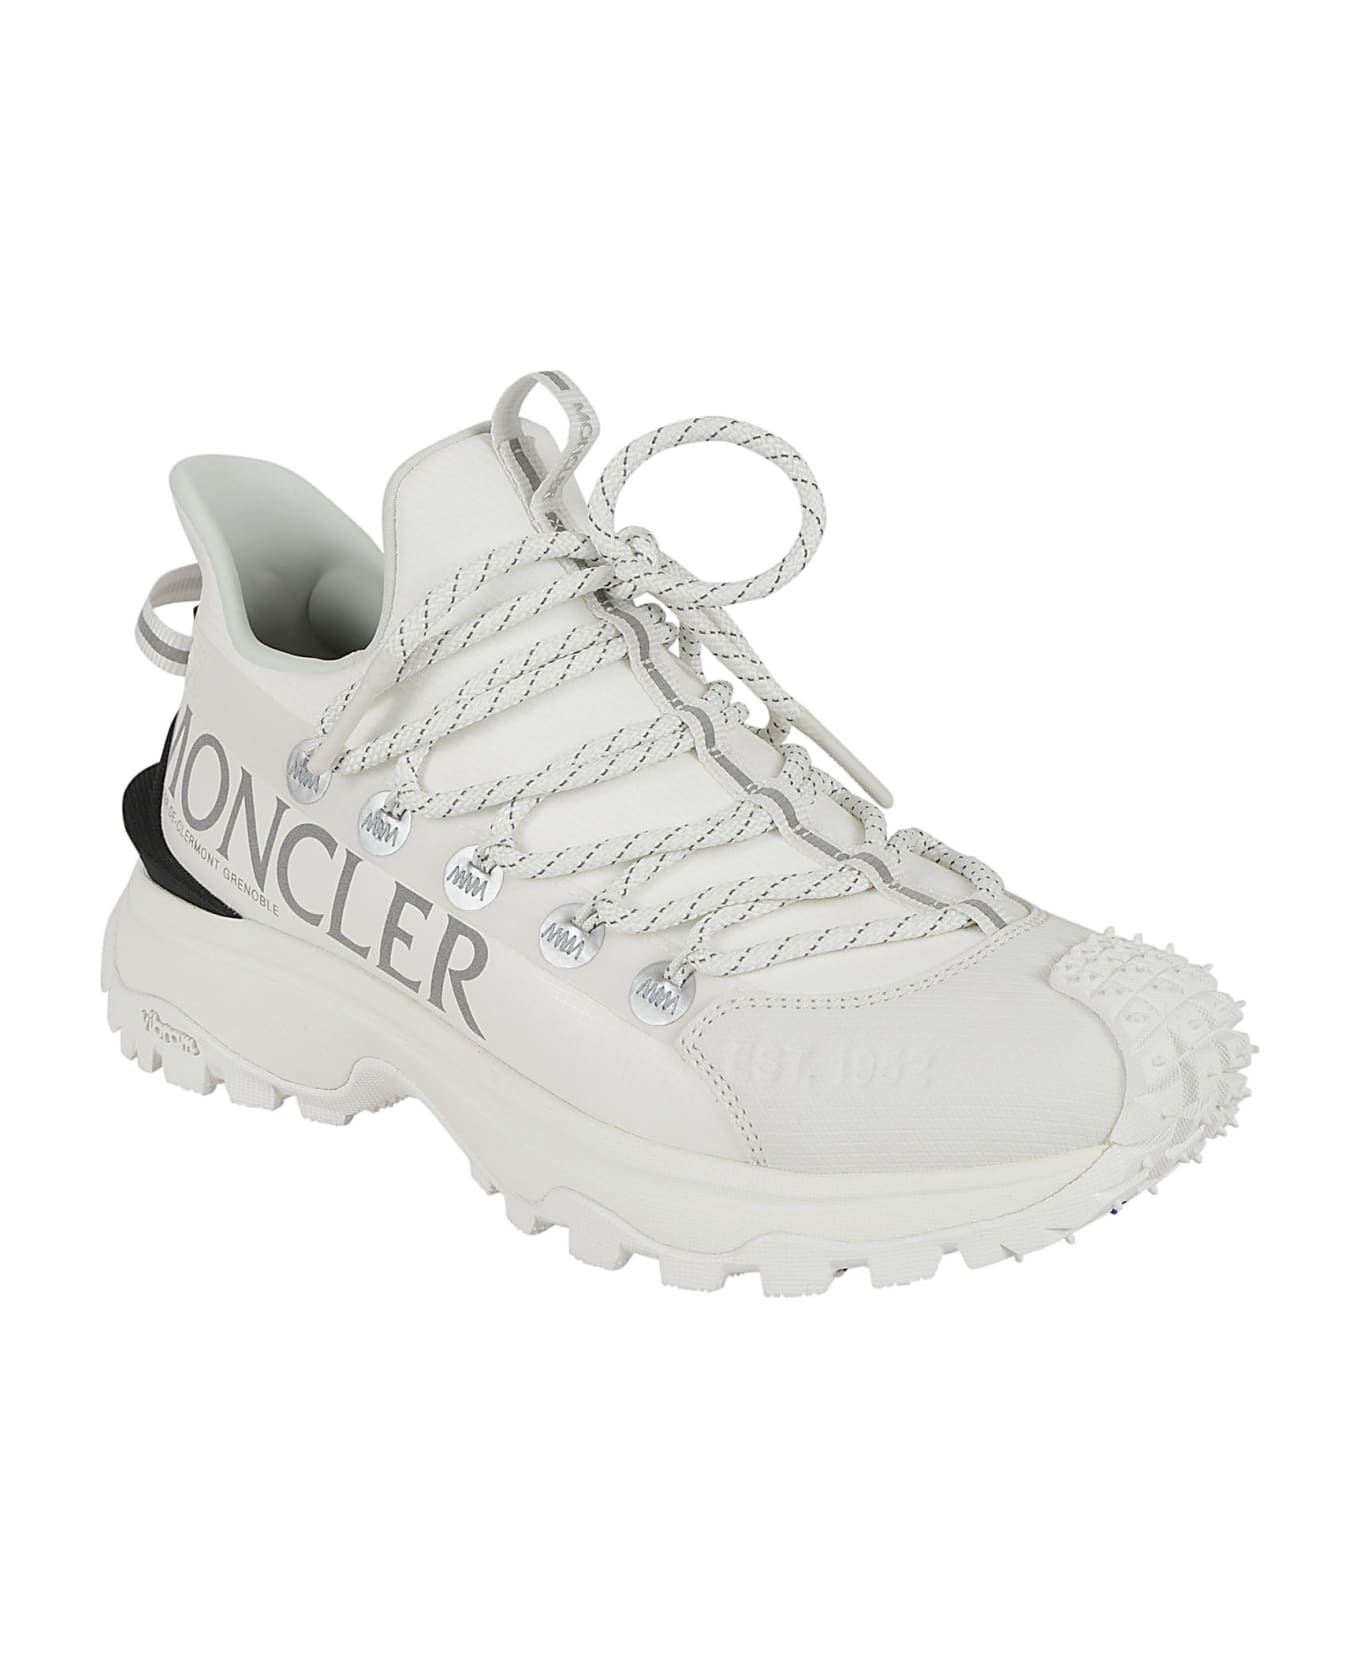 Moncler Trailgrip Lite2 Sneakers - White